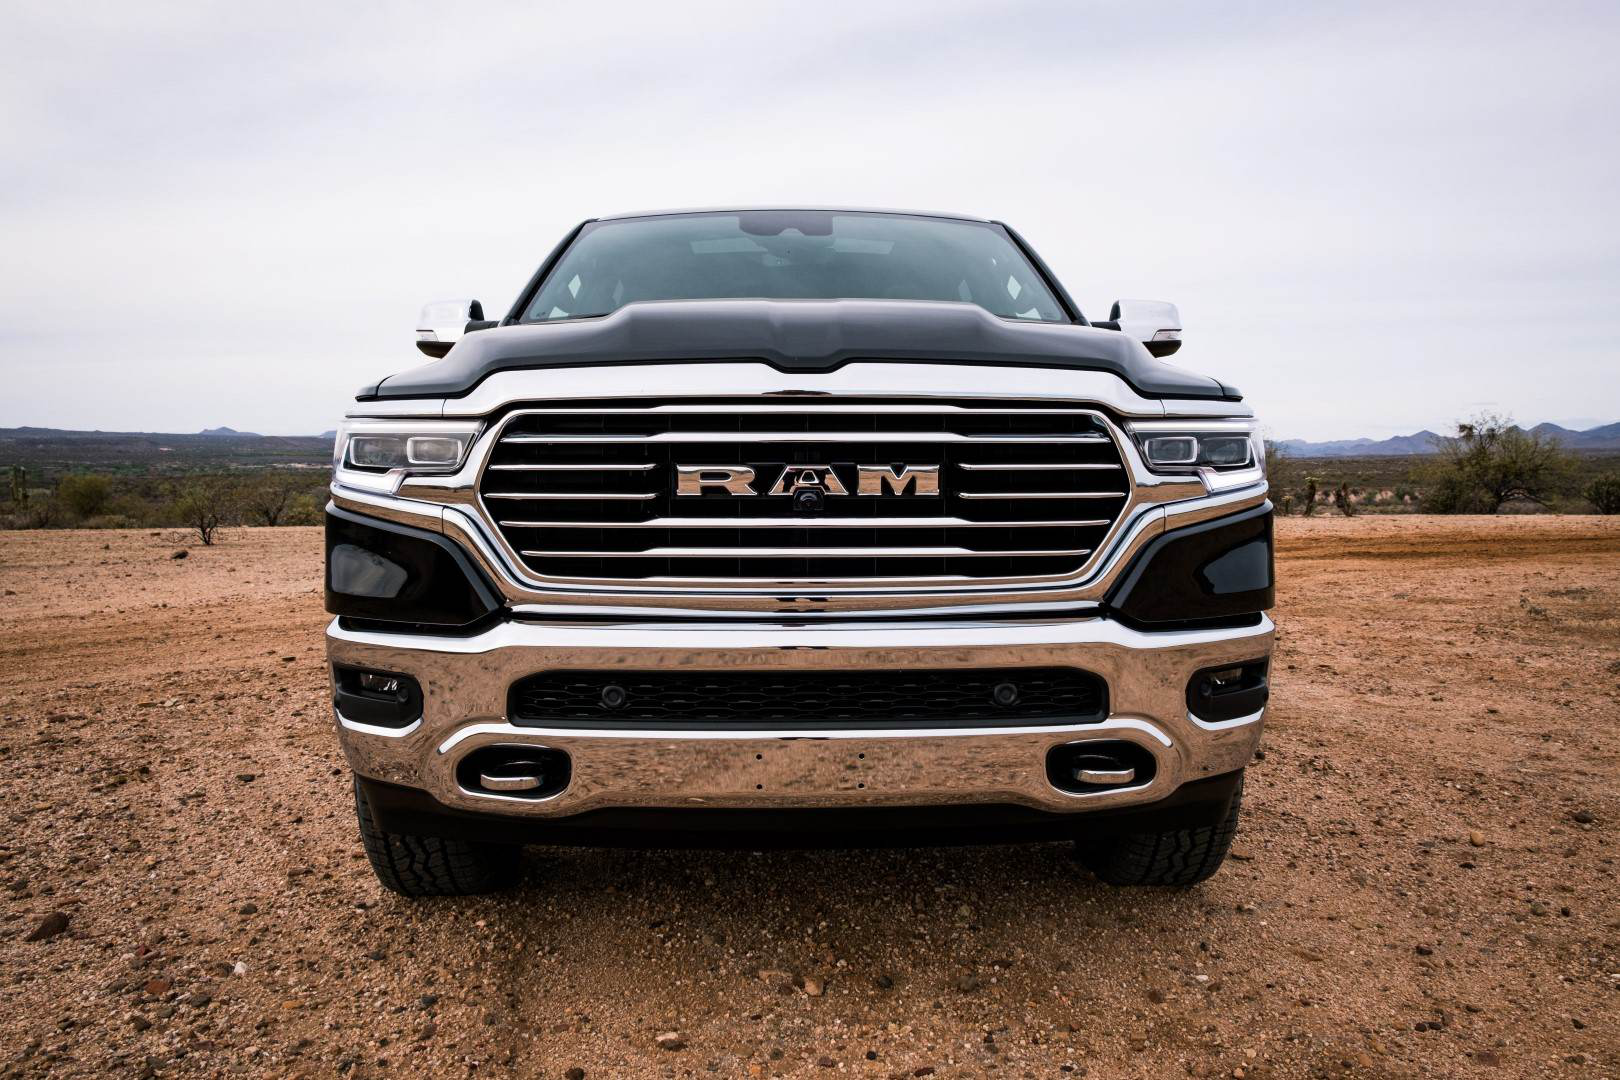 2019-Ram-1500-drive-event-36-of-42-Large.jpg